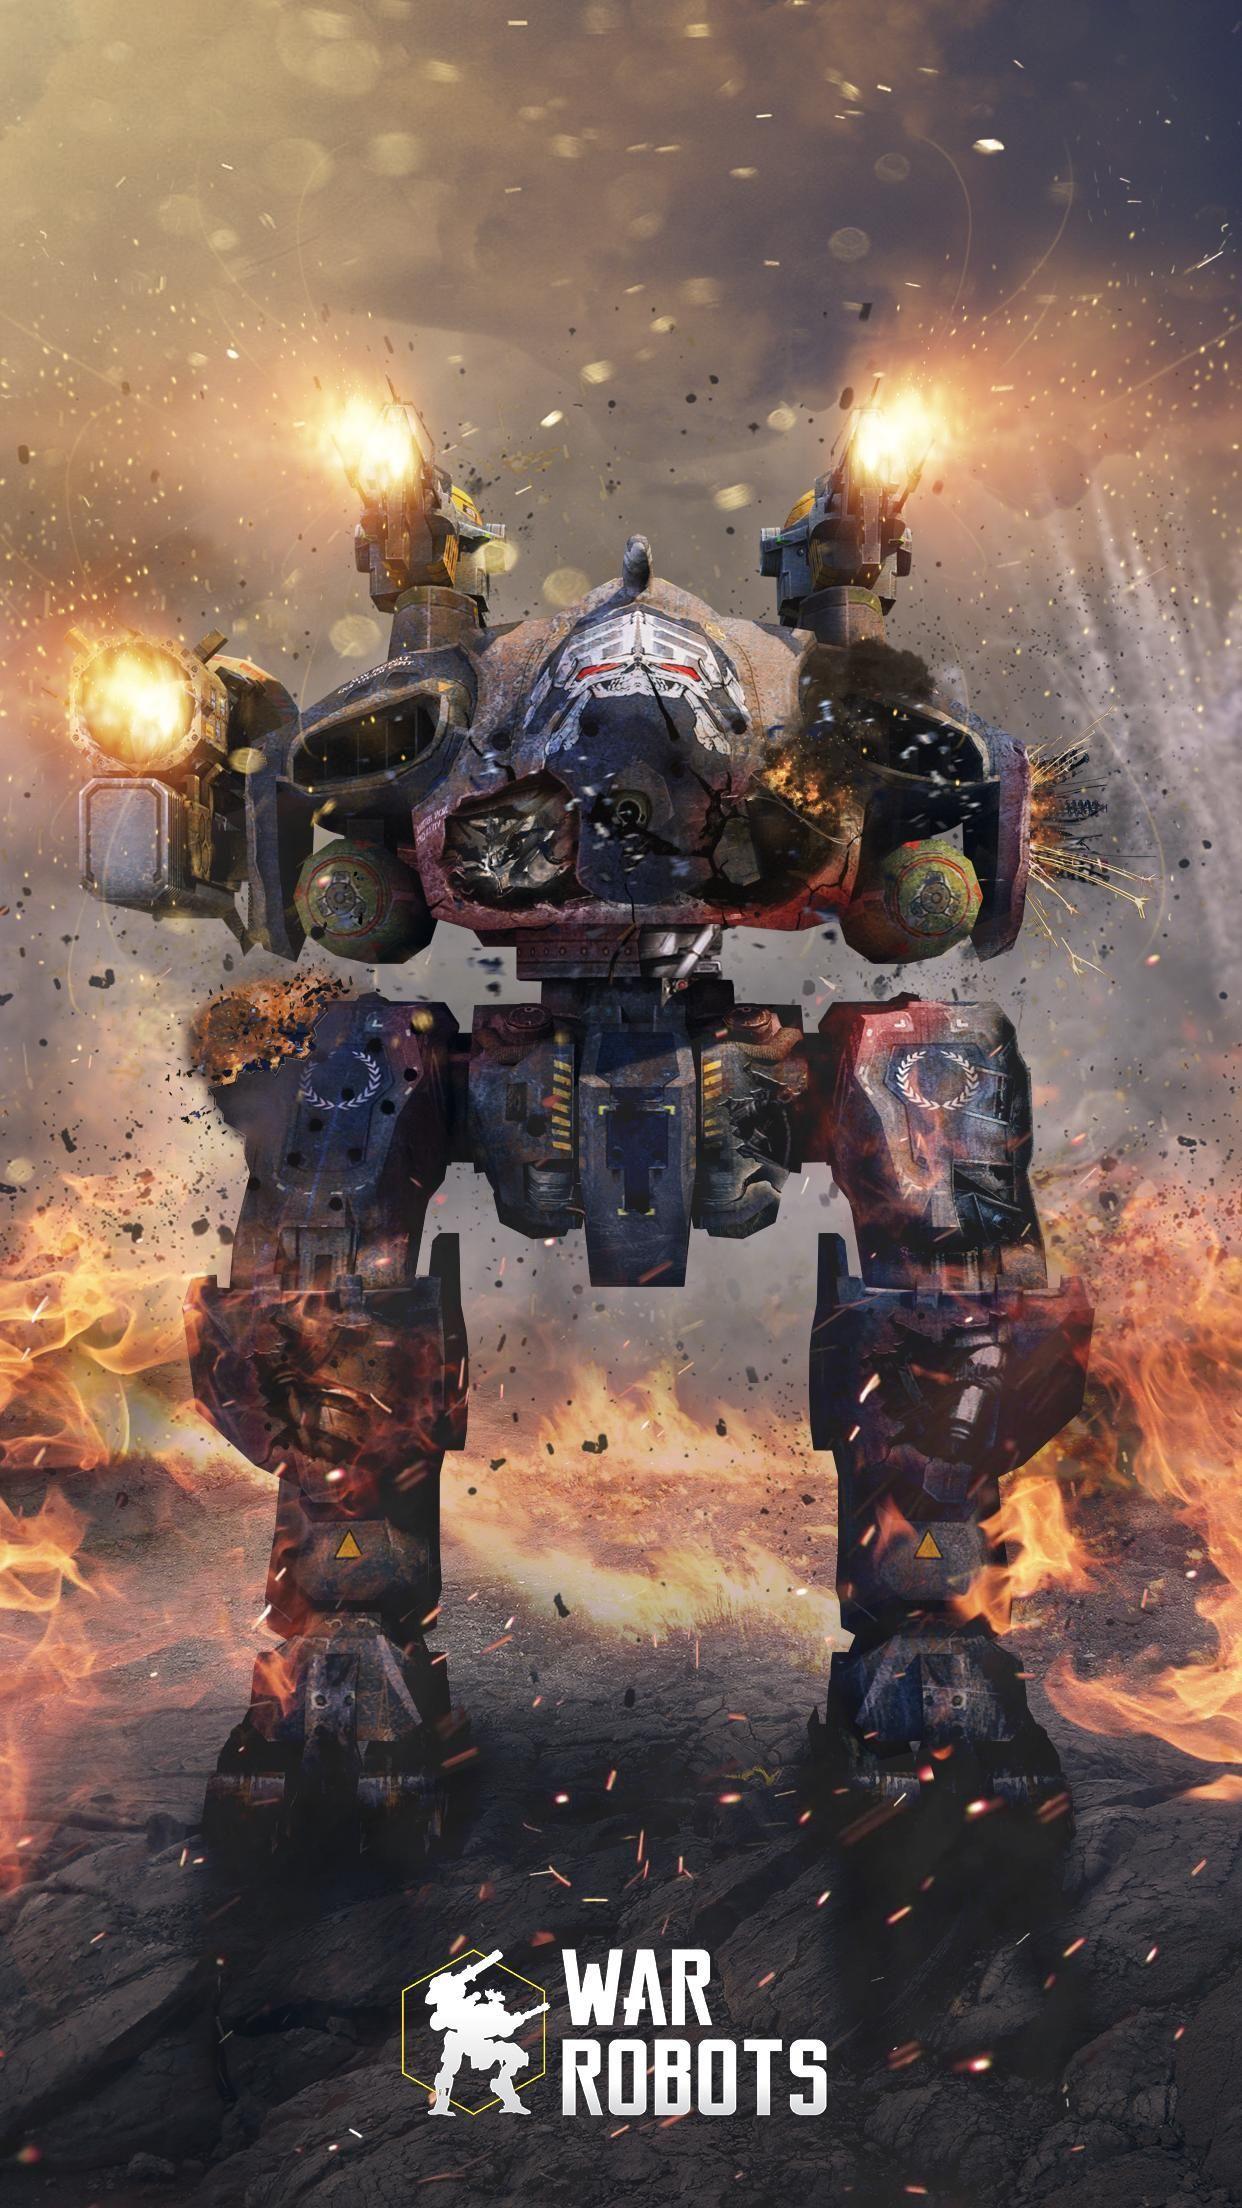 War Robot Picture On Wallpaper 1080p HD. Battle tech in 2018